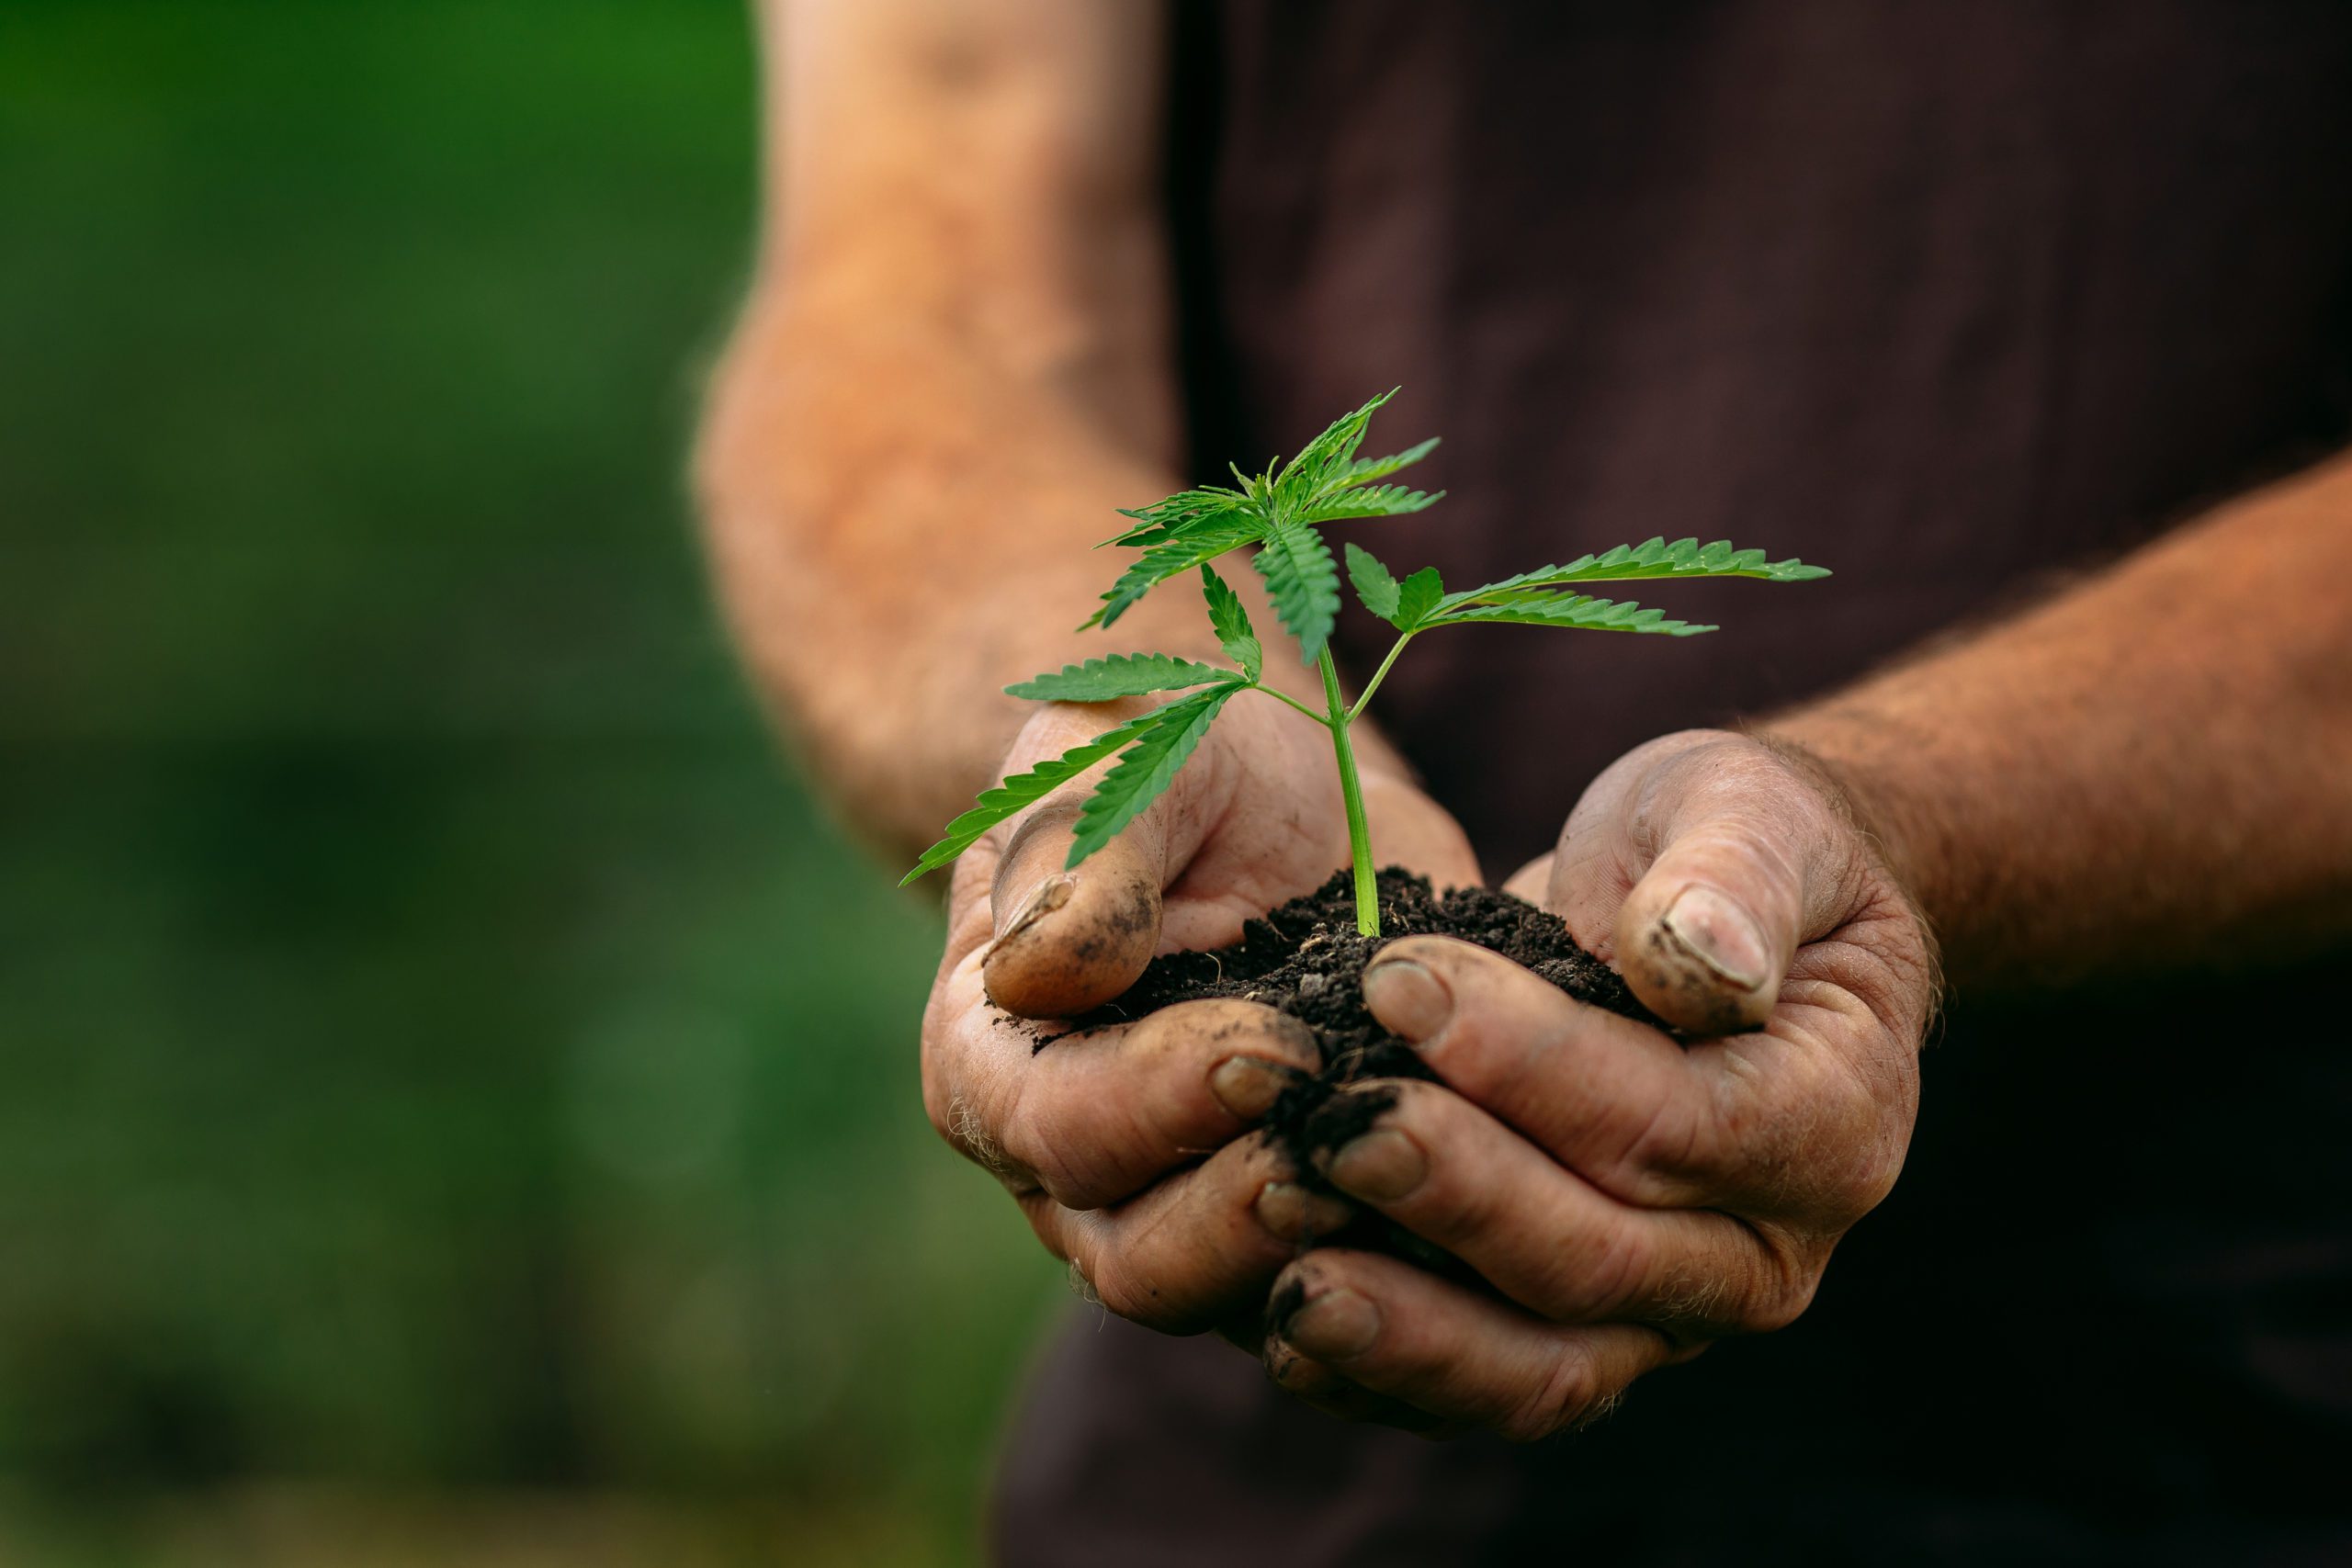 Farmer hands holds baby cannabis plant